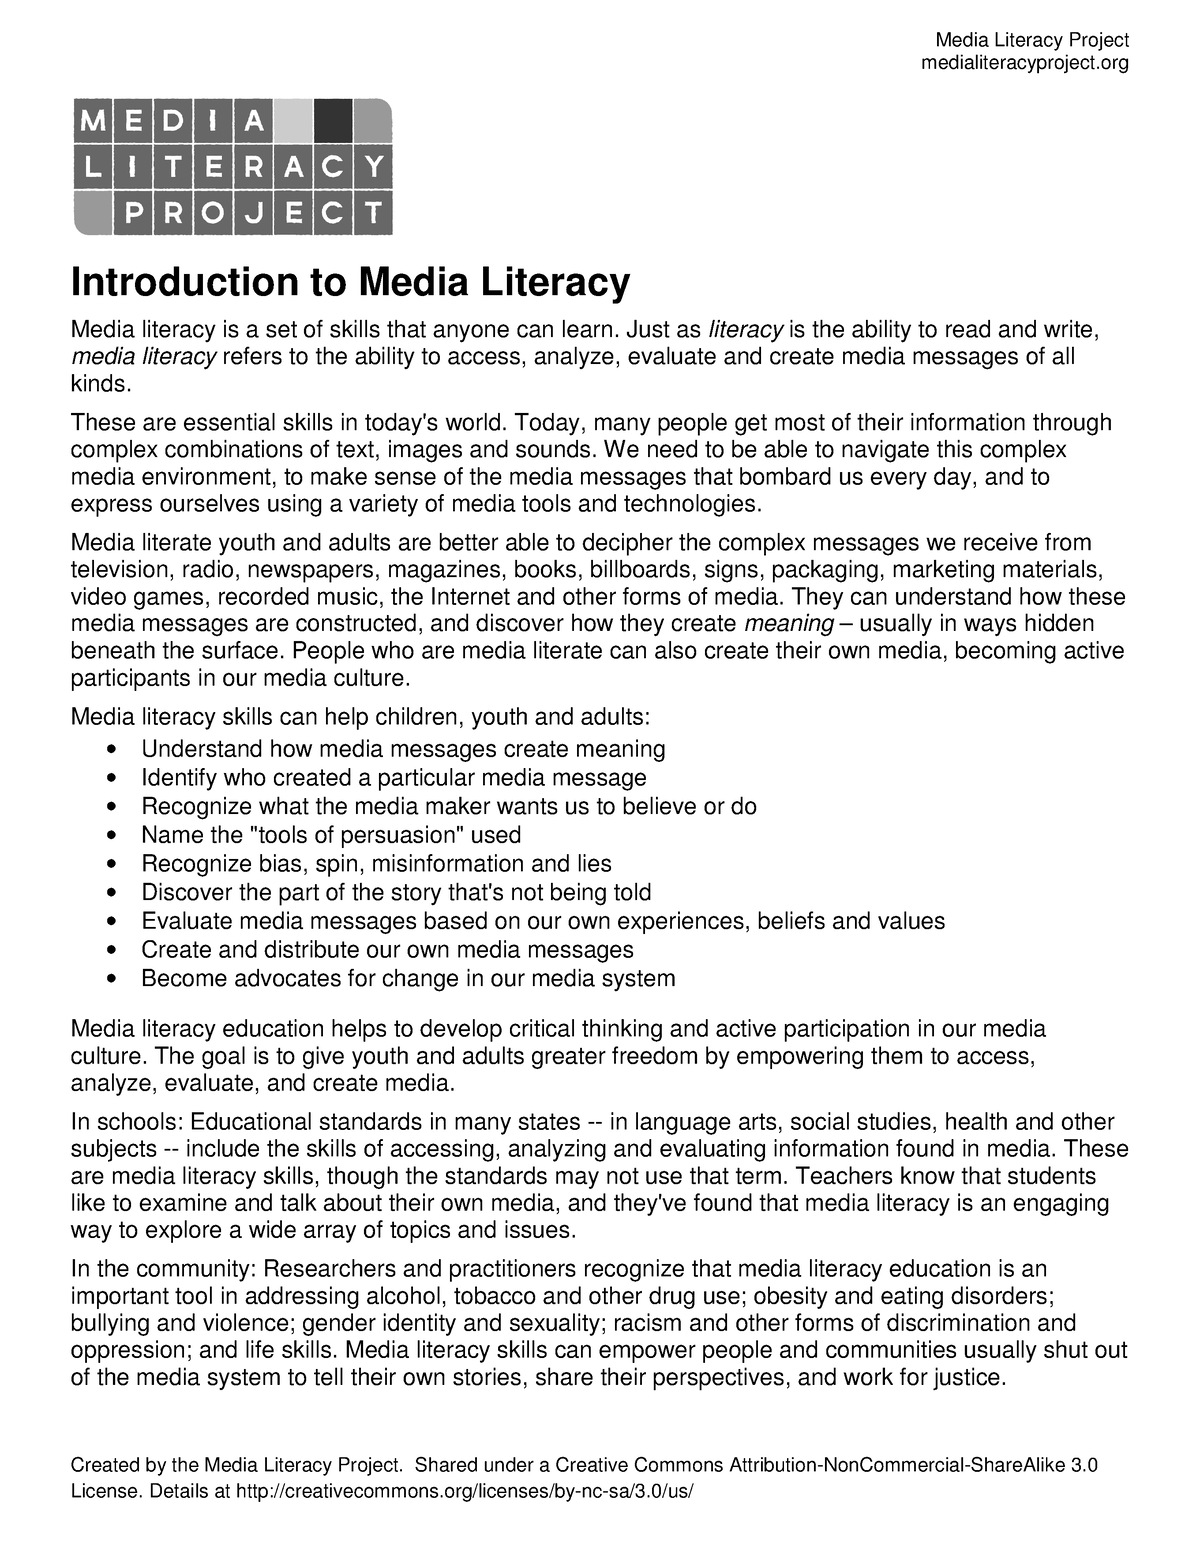 Intro to Media Literacy - Media Literacy Project medialiteracyproject ...